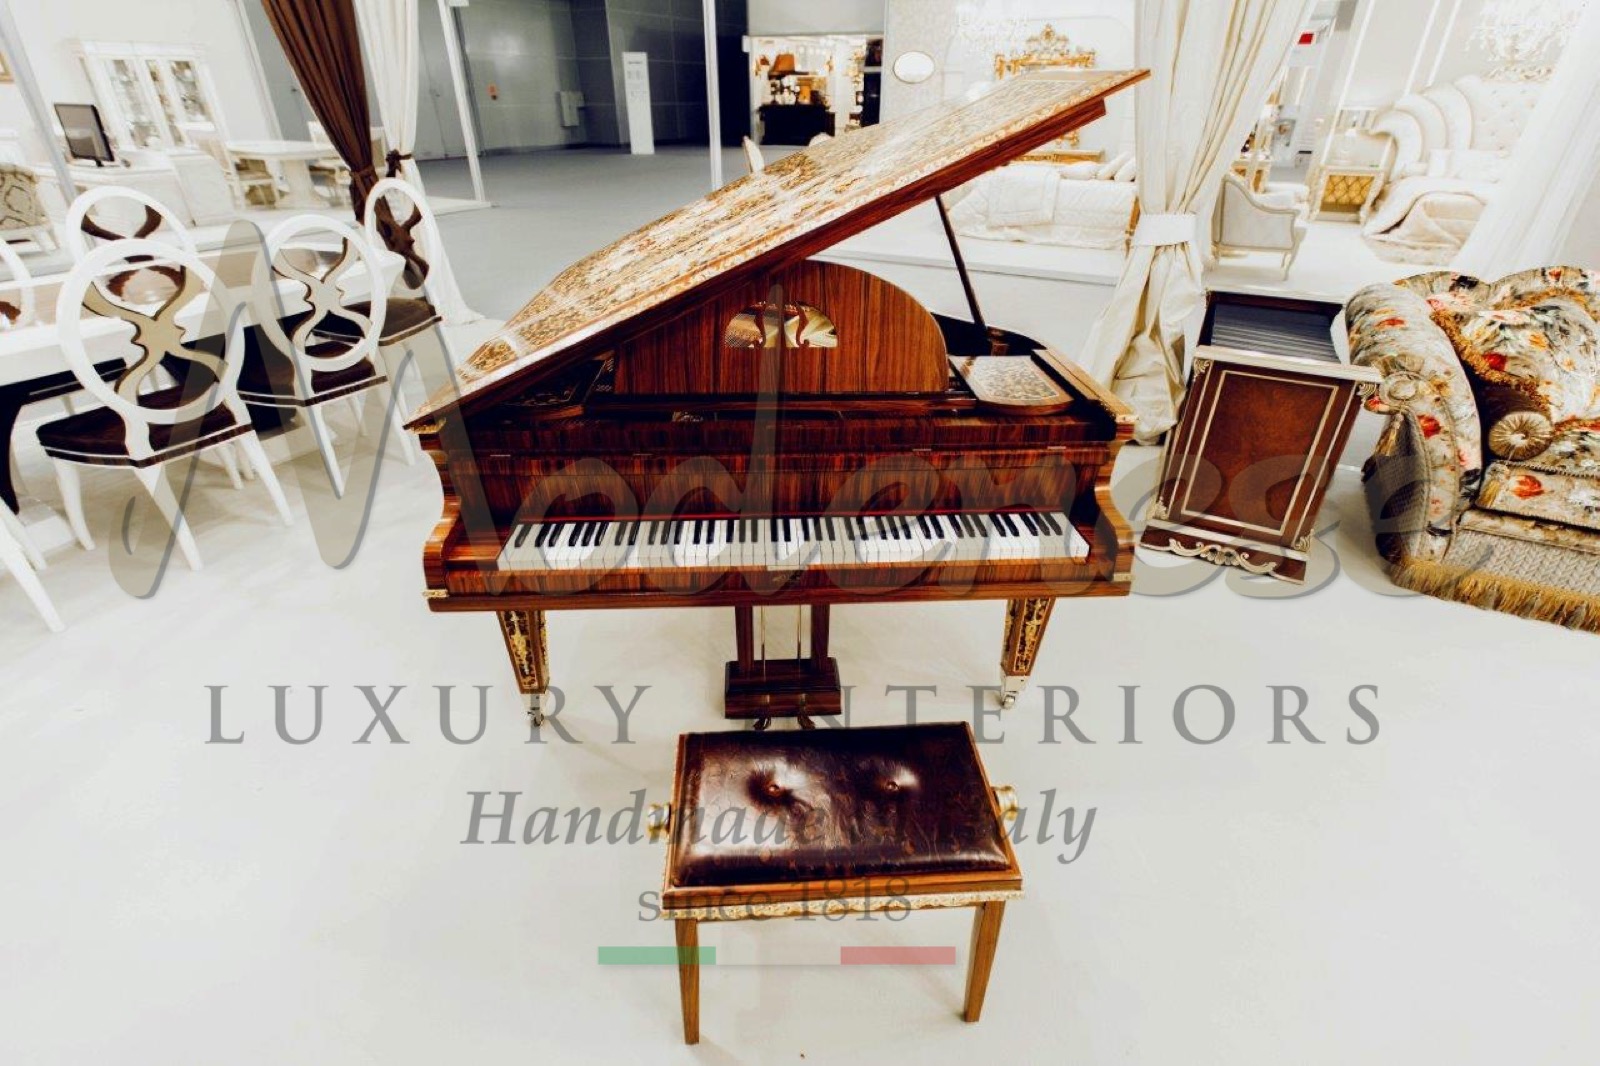 artisanal craftsmanship Italian interior design ideas luxury classic baroque empire furniture French style premium fabrics solid wood